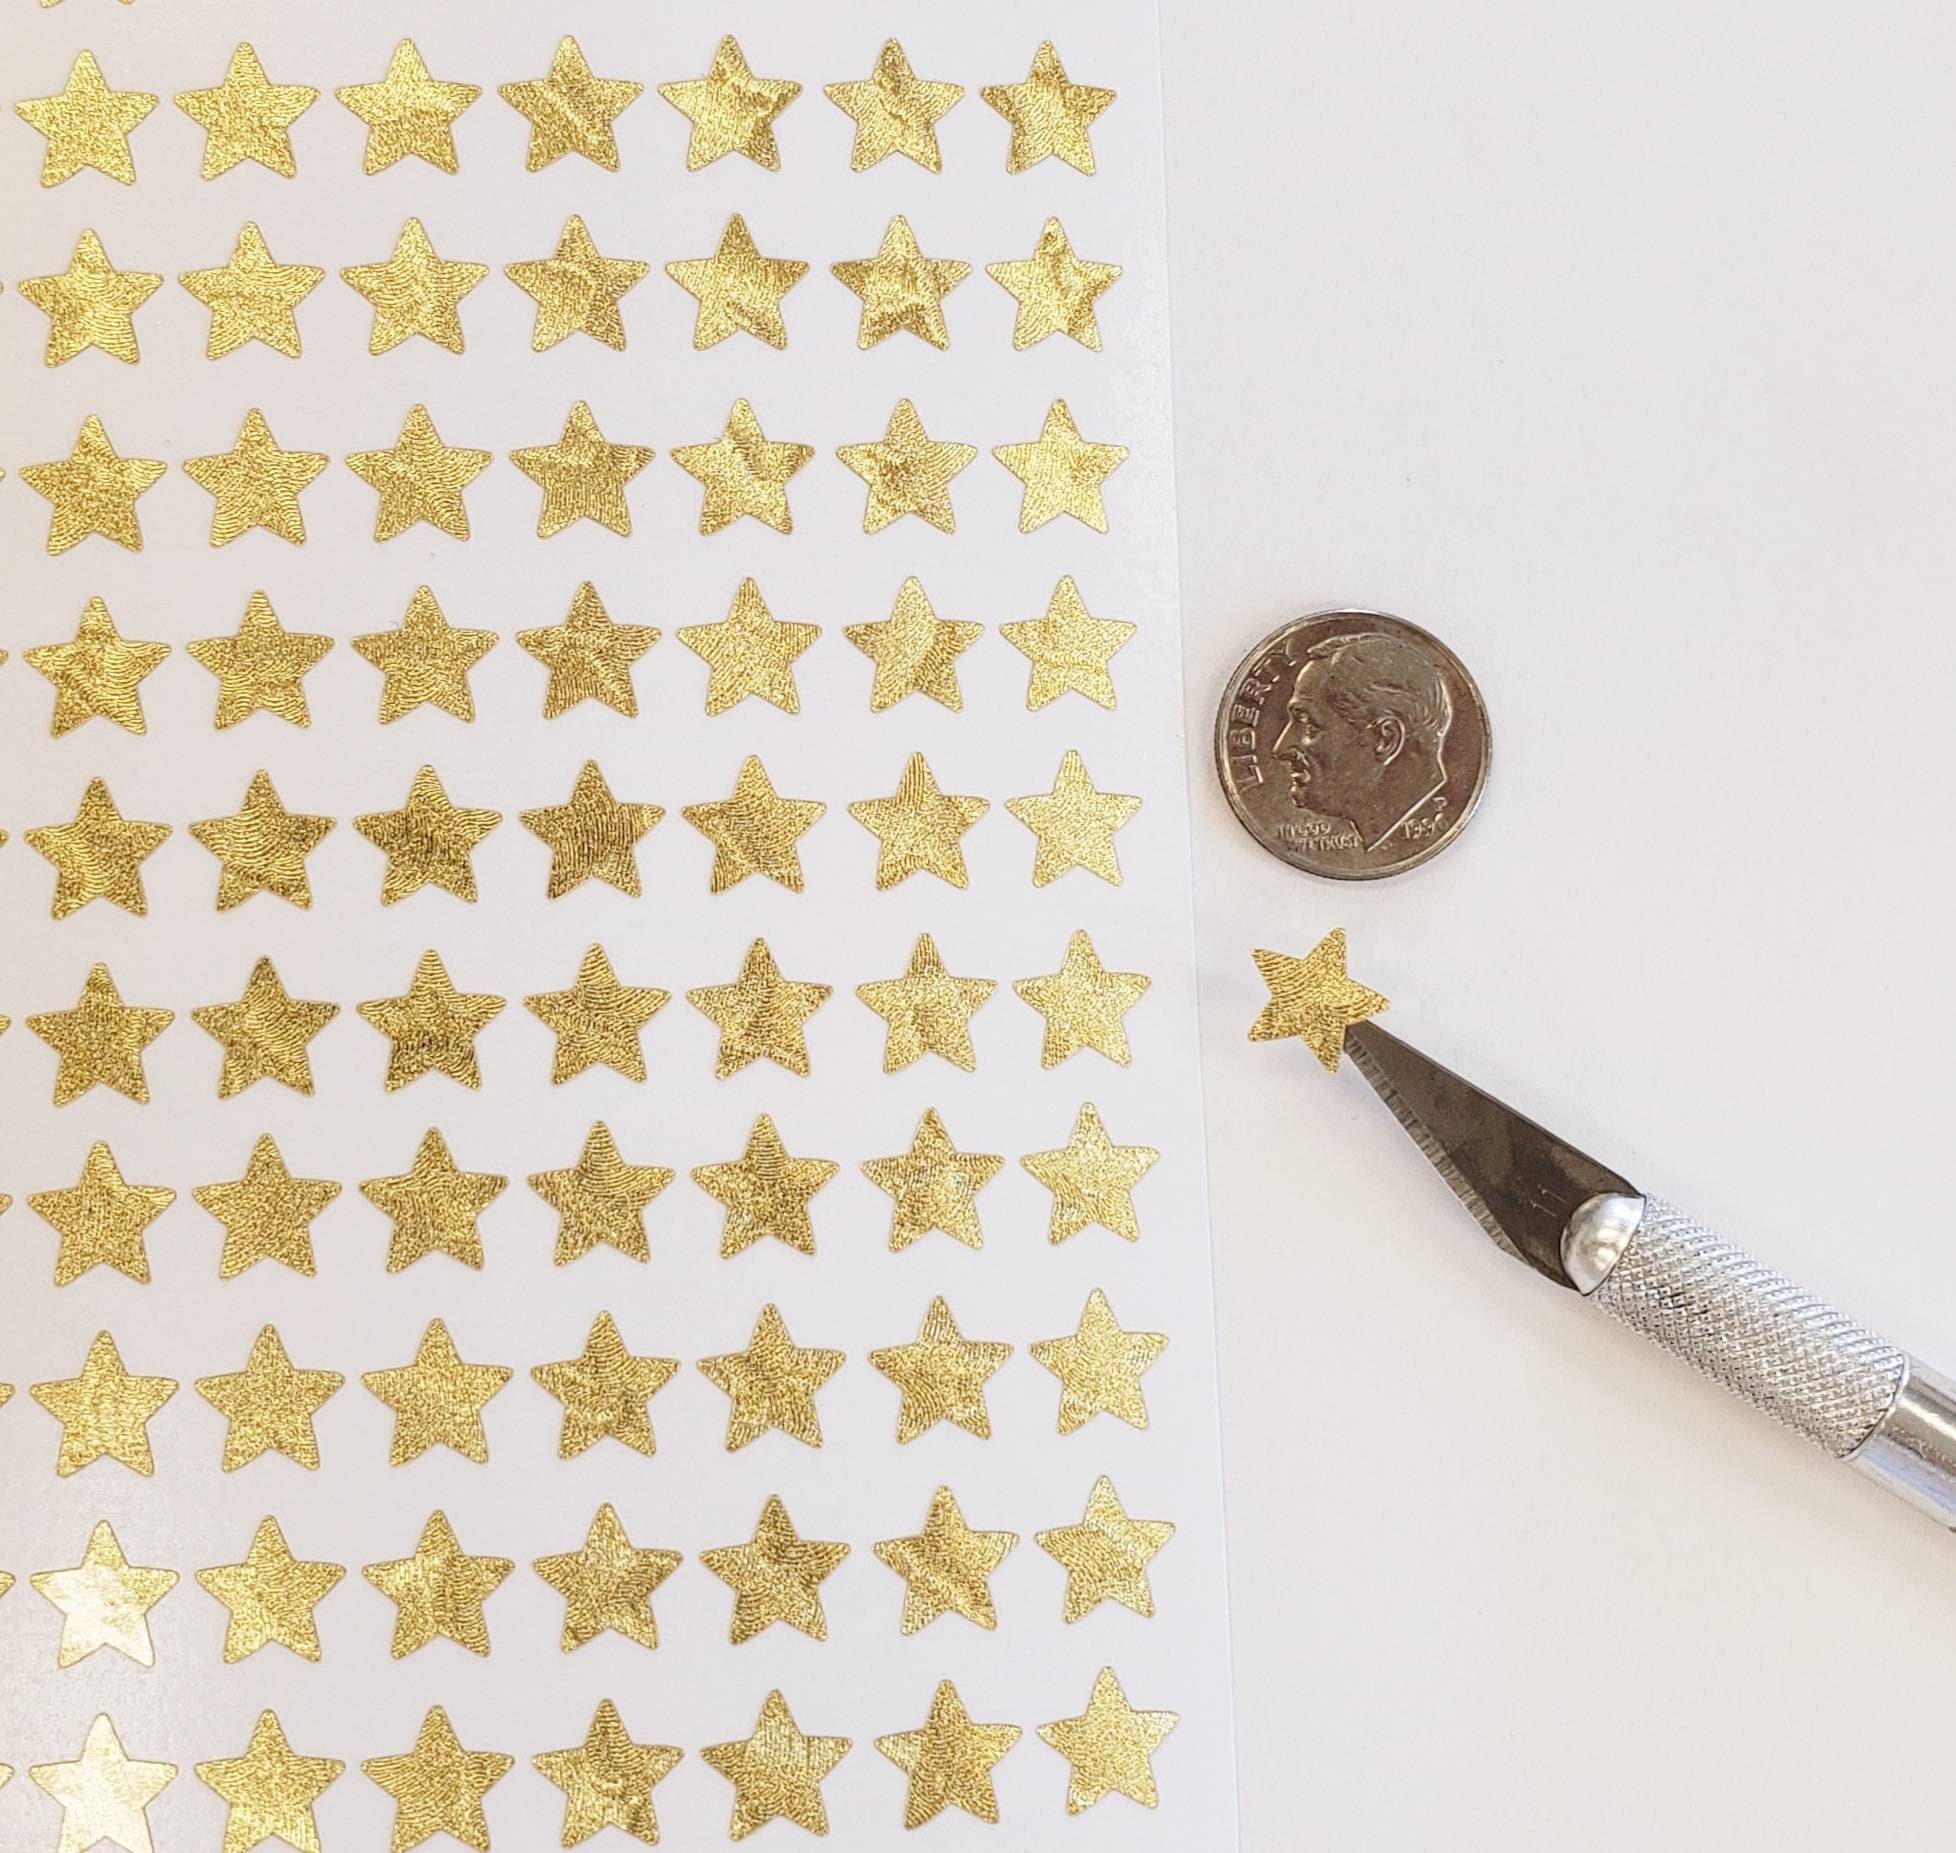 Microglitter-Sticker, Sternen-Bordüre, gold